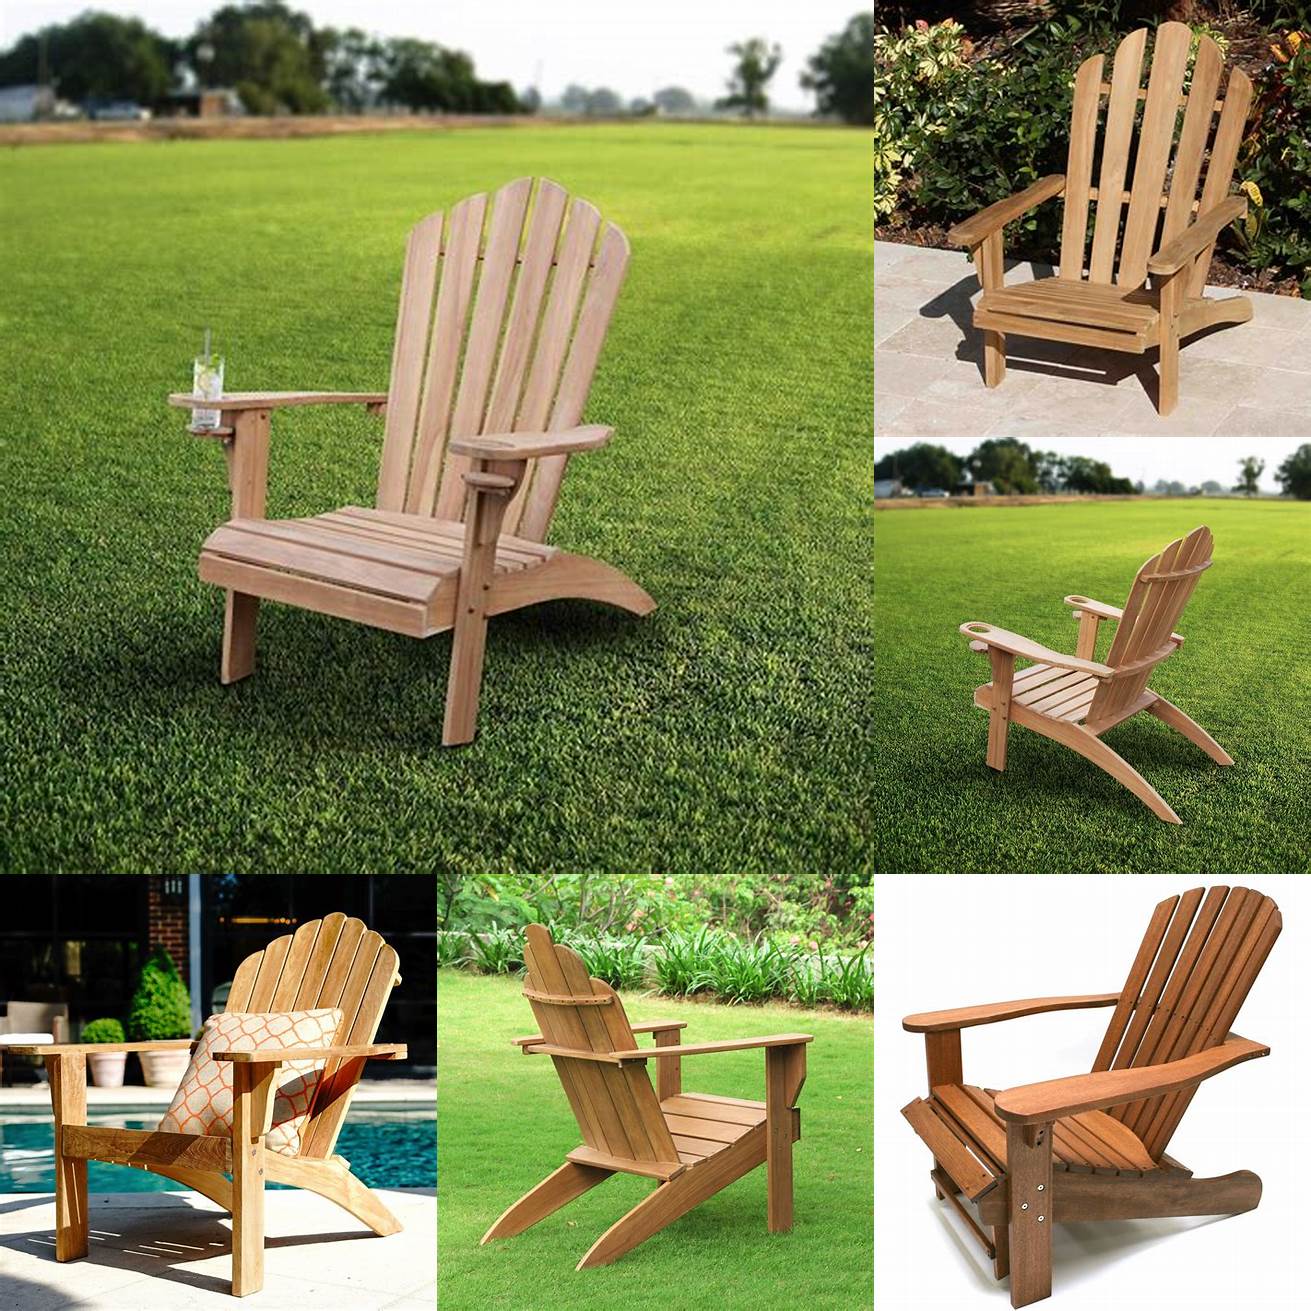 Teak Wood Adirondack Chair